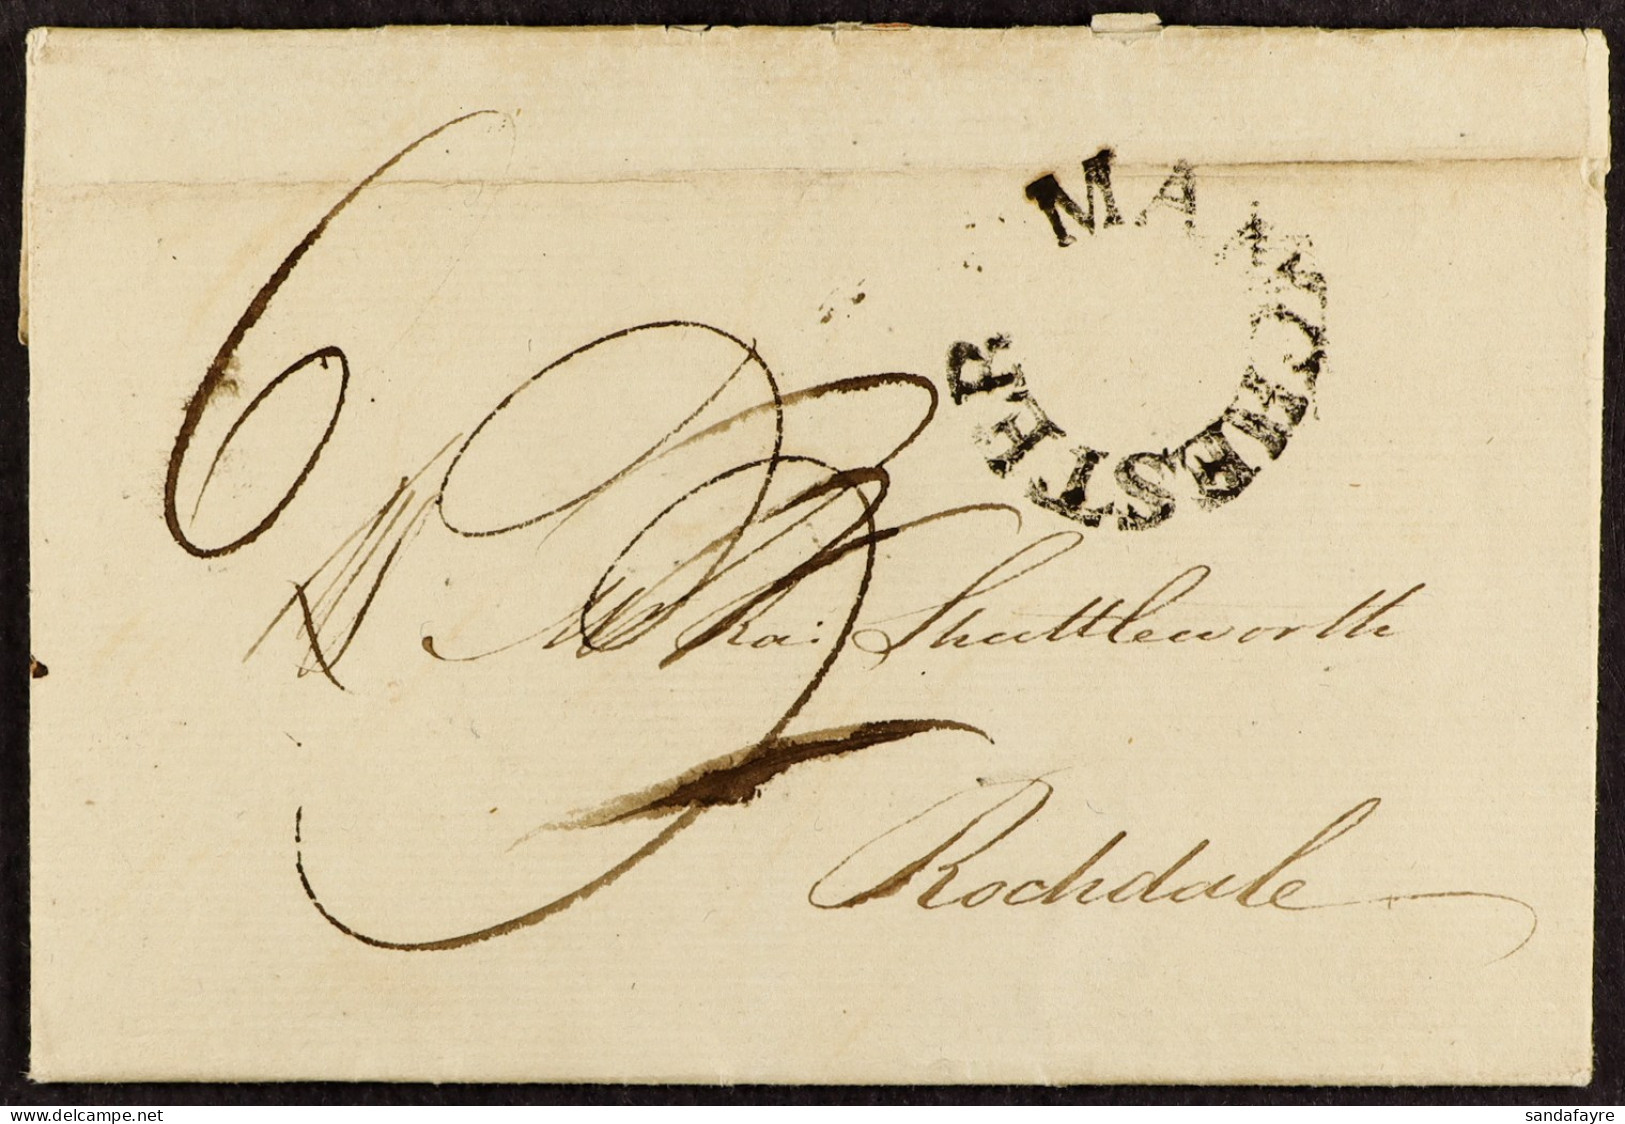 STAMP - 1797 (Apr) EL With Very Fine Undated 'MANCHESTER' Undated Unframed Circular - ...-1840 Préphilatélie